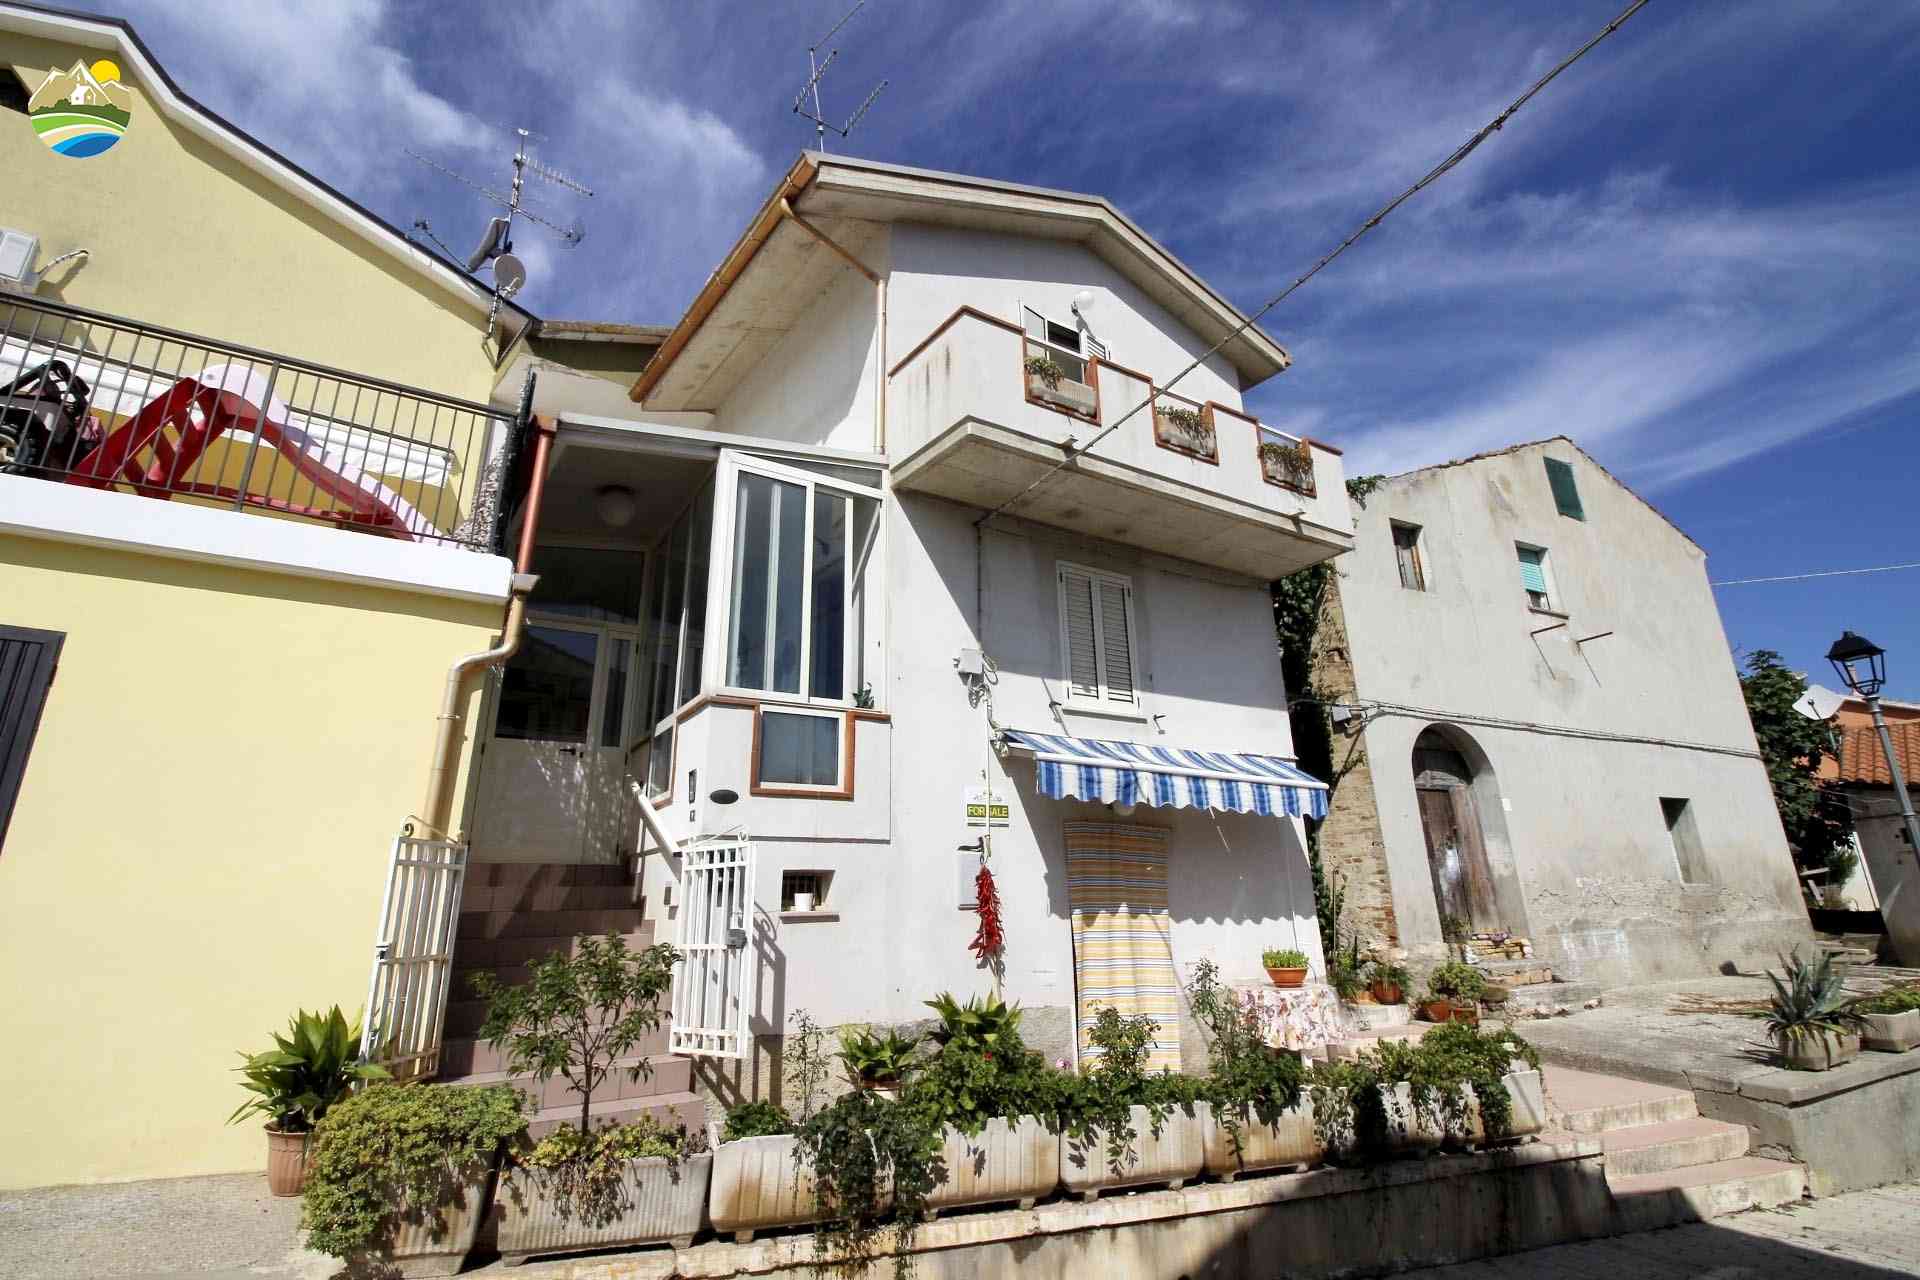 Casa in paese Casa in paese in vendita Montefino (TE), Casa Peperone - Montefino - EUR 58.435 10